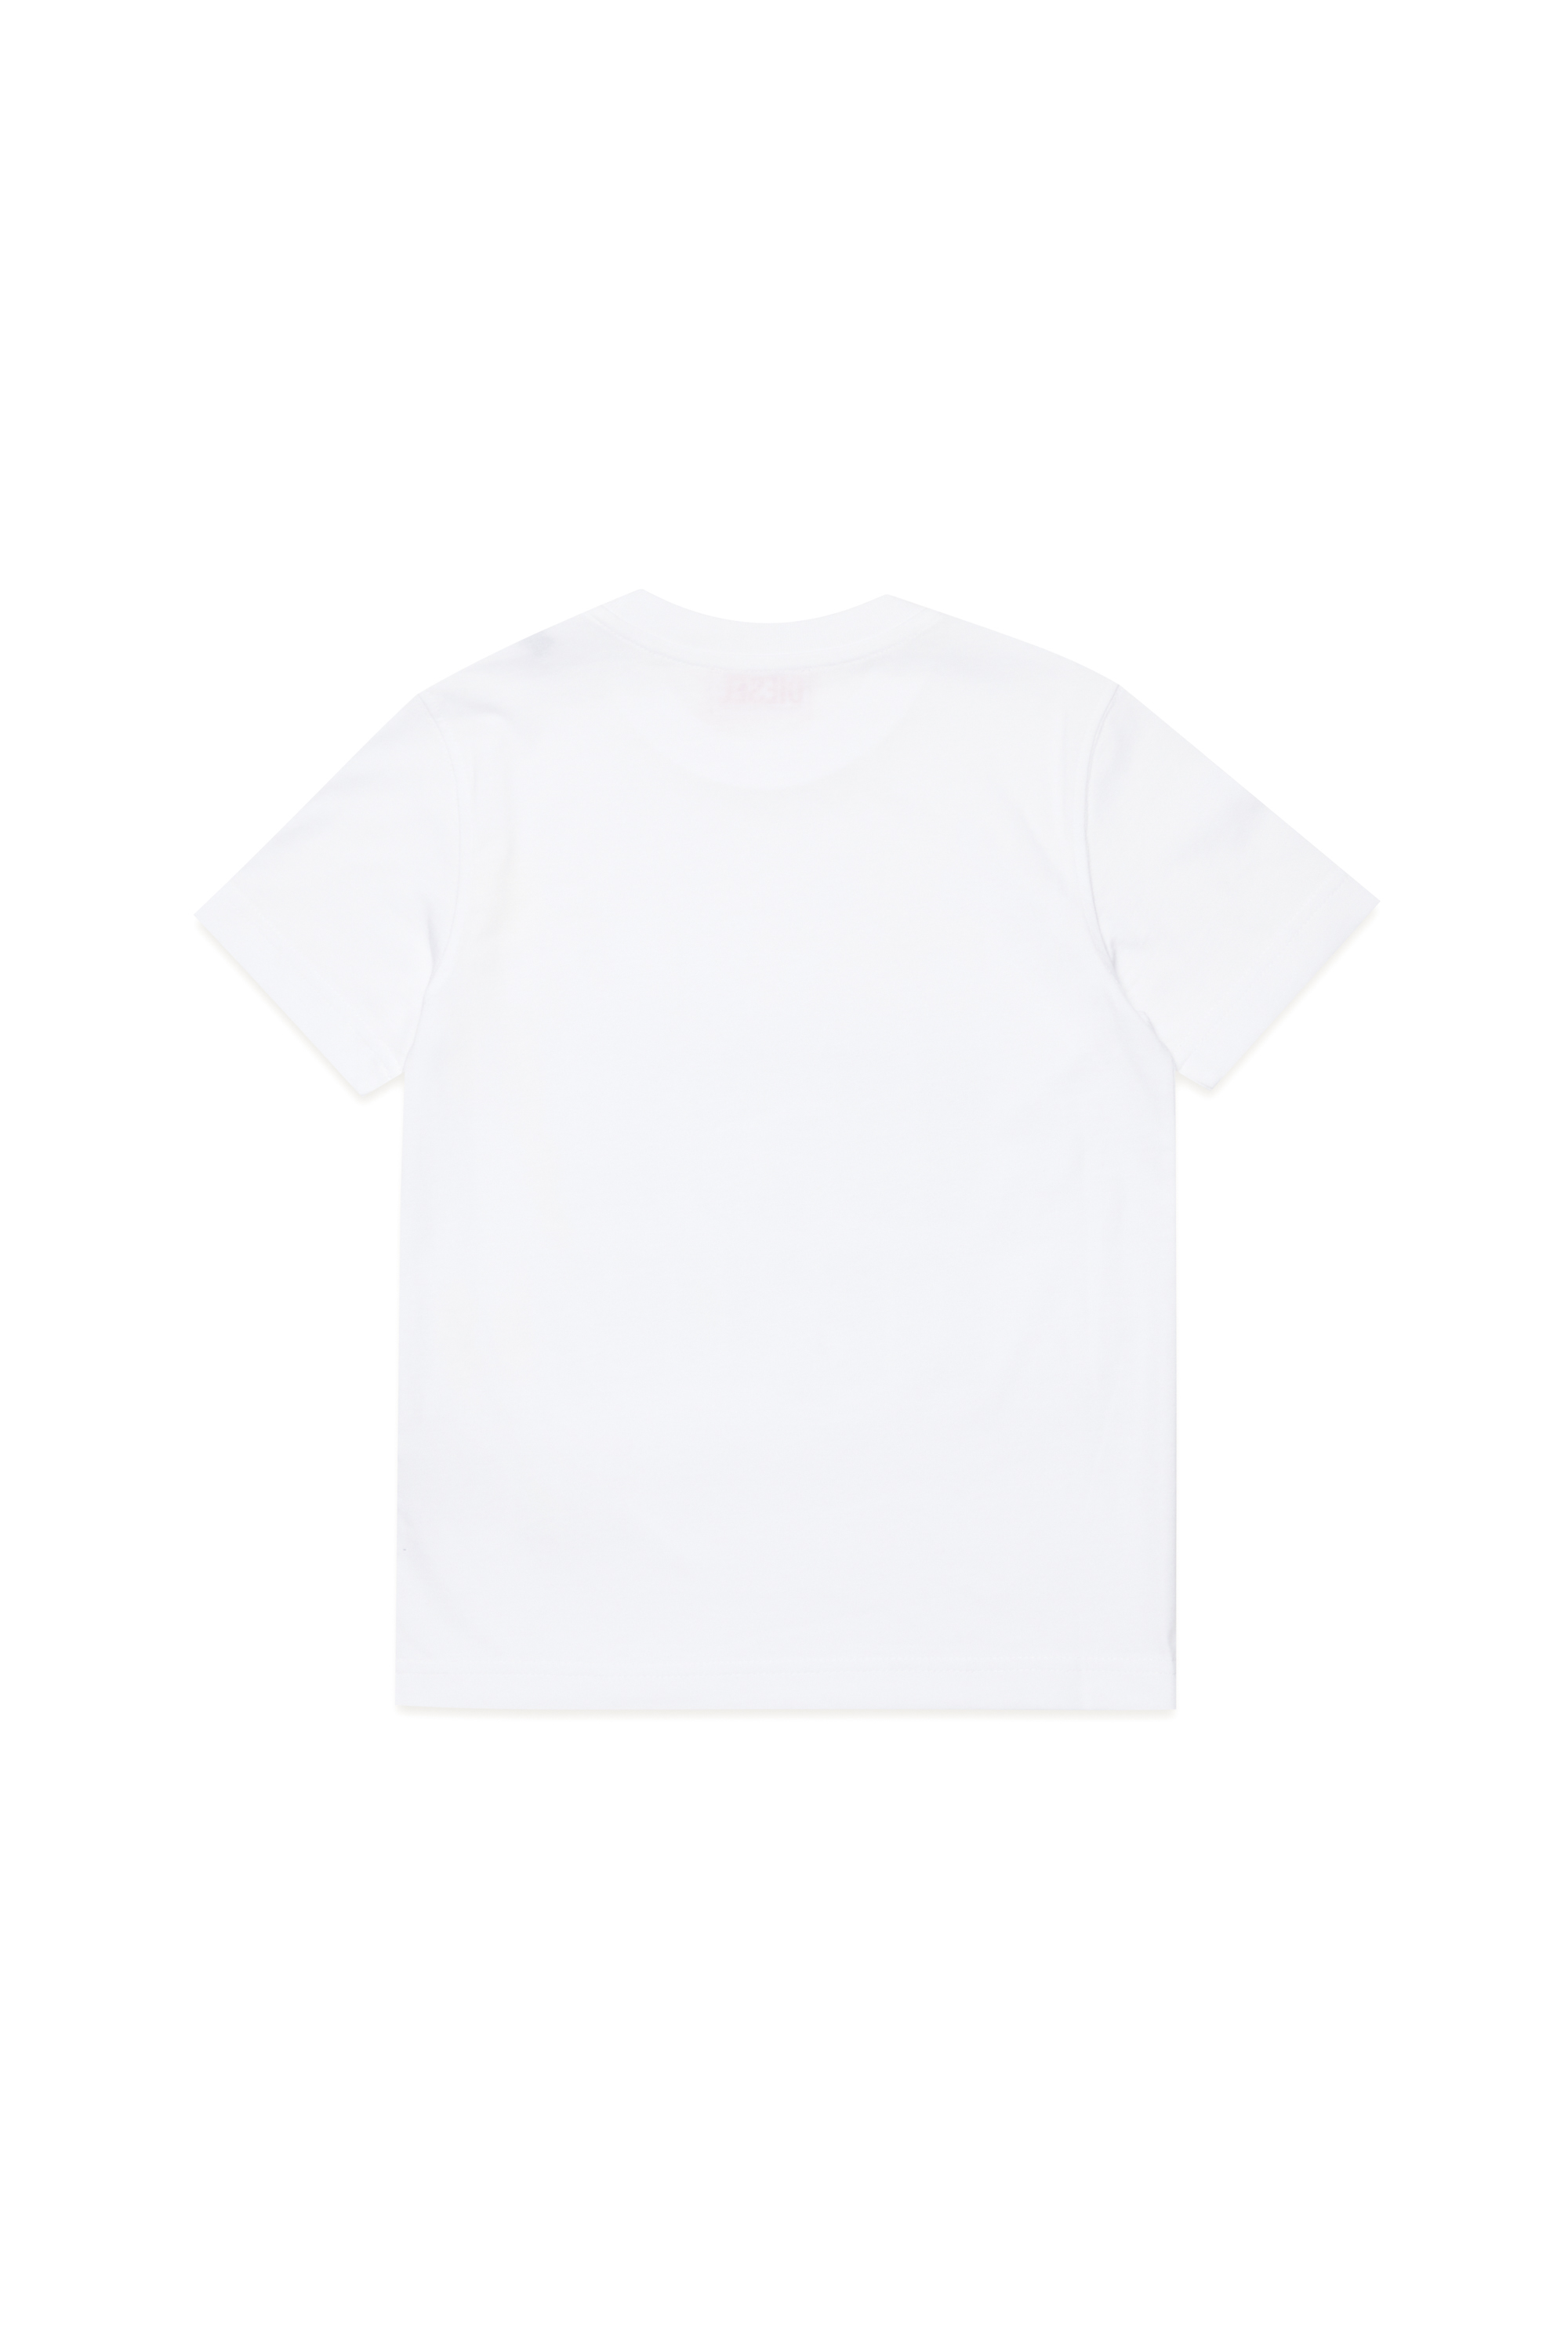 Diesel - TDIEGORL7, Homme T-shirt avec imprimé photo Diesel Denim 78 in Blanc - Image 2